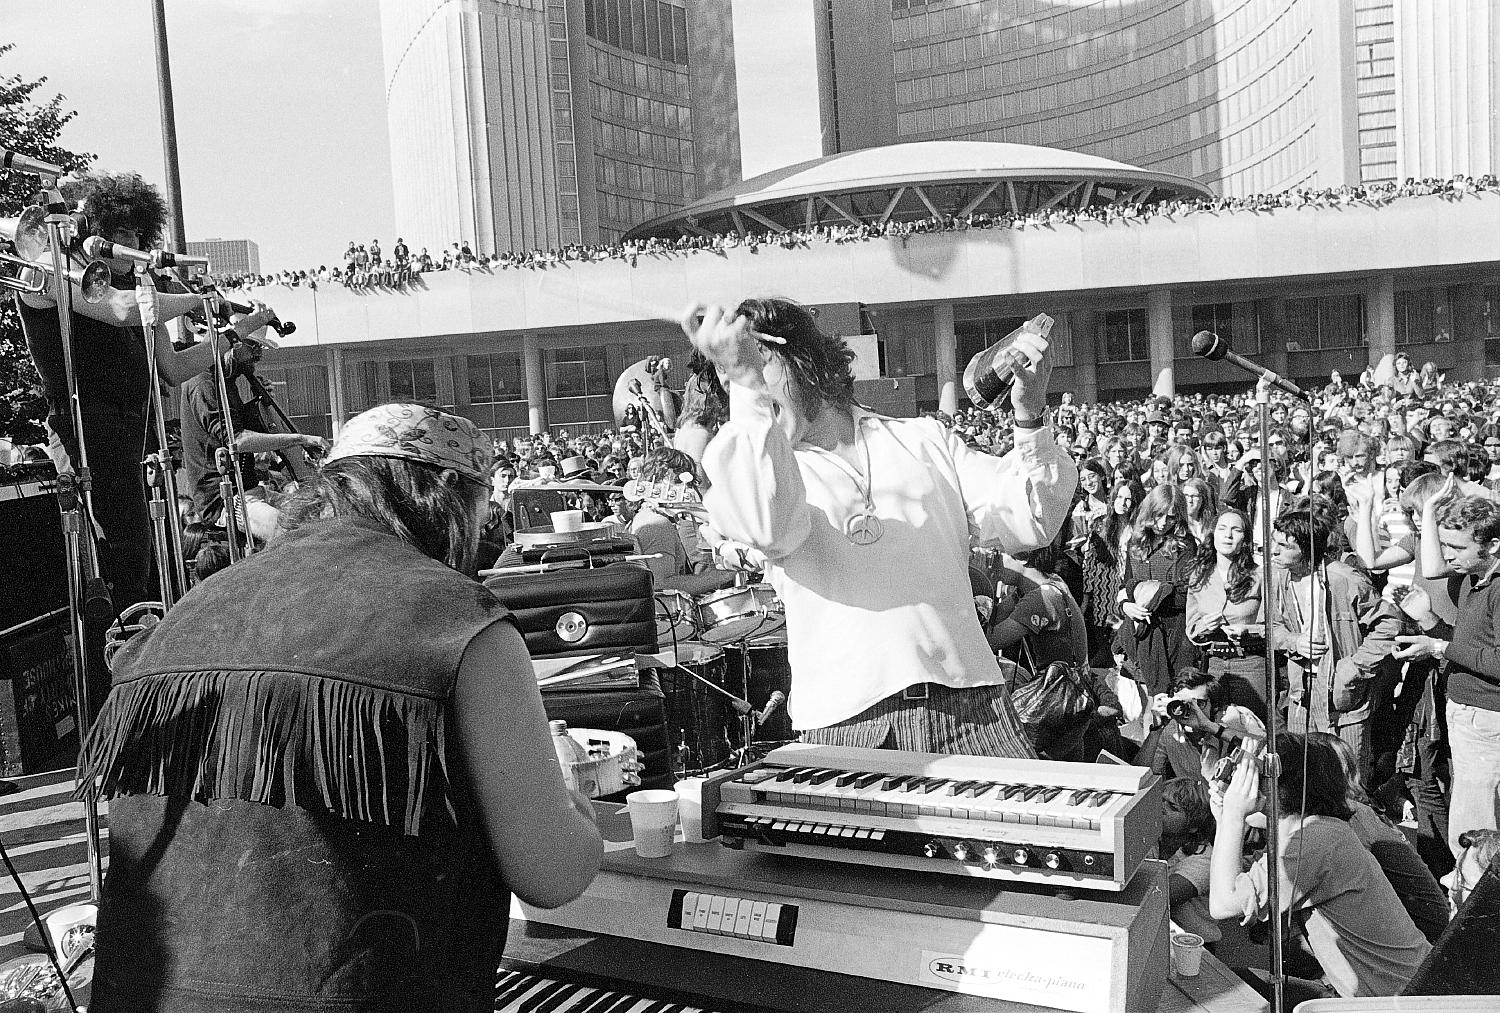 Paul Hoffert & Bob McBride, Lighthouse Concert at City Hall, Toronto, 1970.